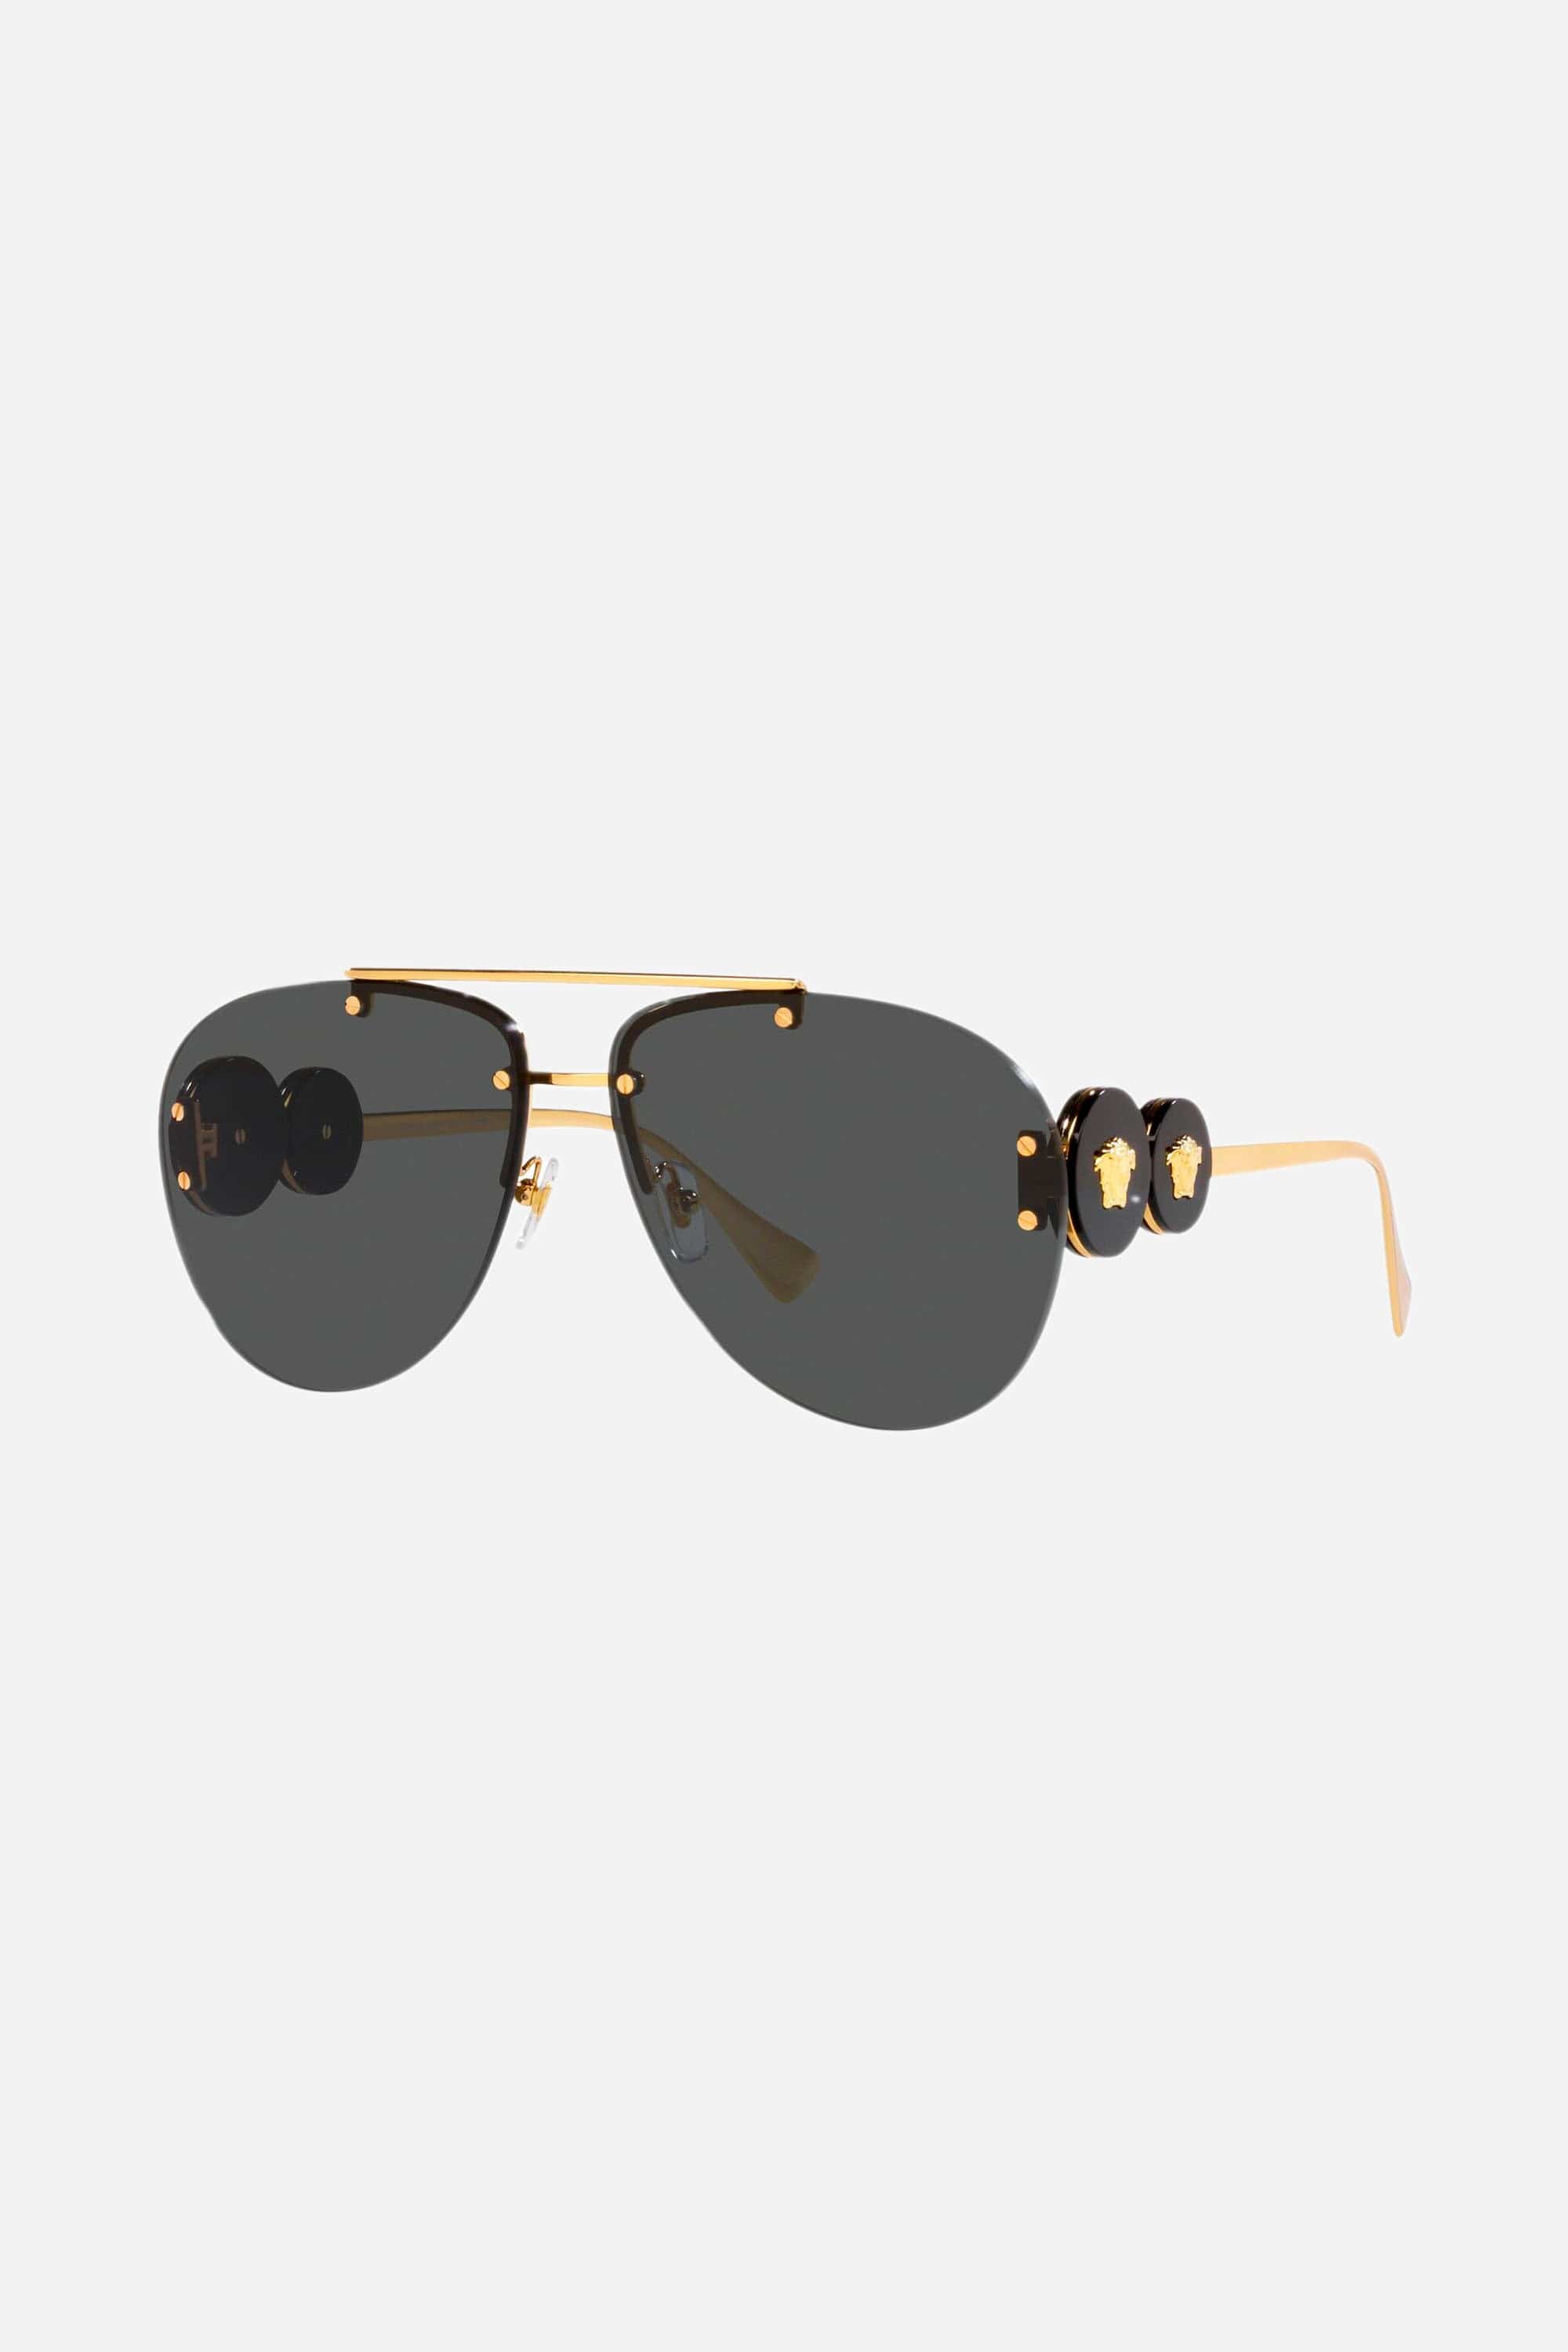 Versace grey pilot sunglasses featuring iconic jellyfish - Eyewear Club